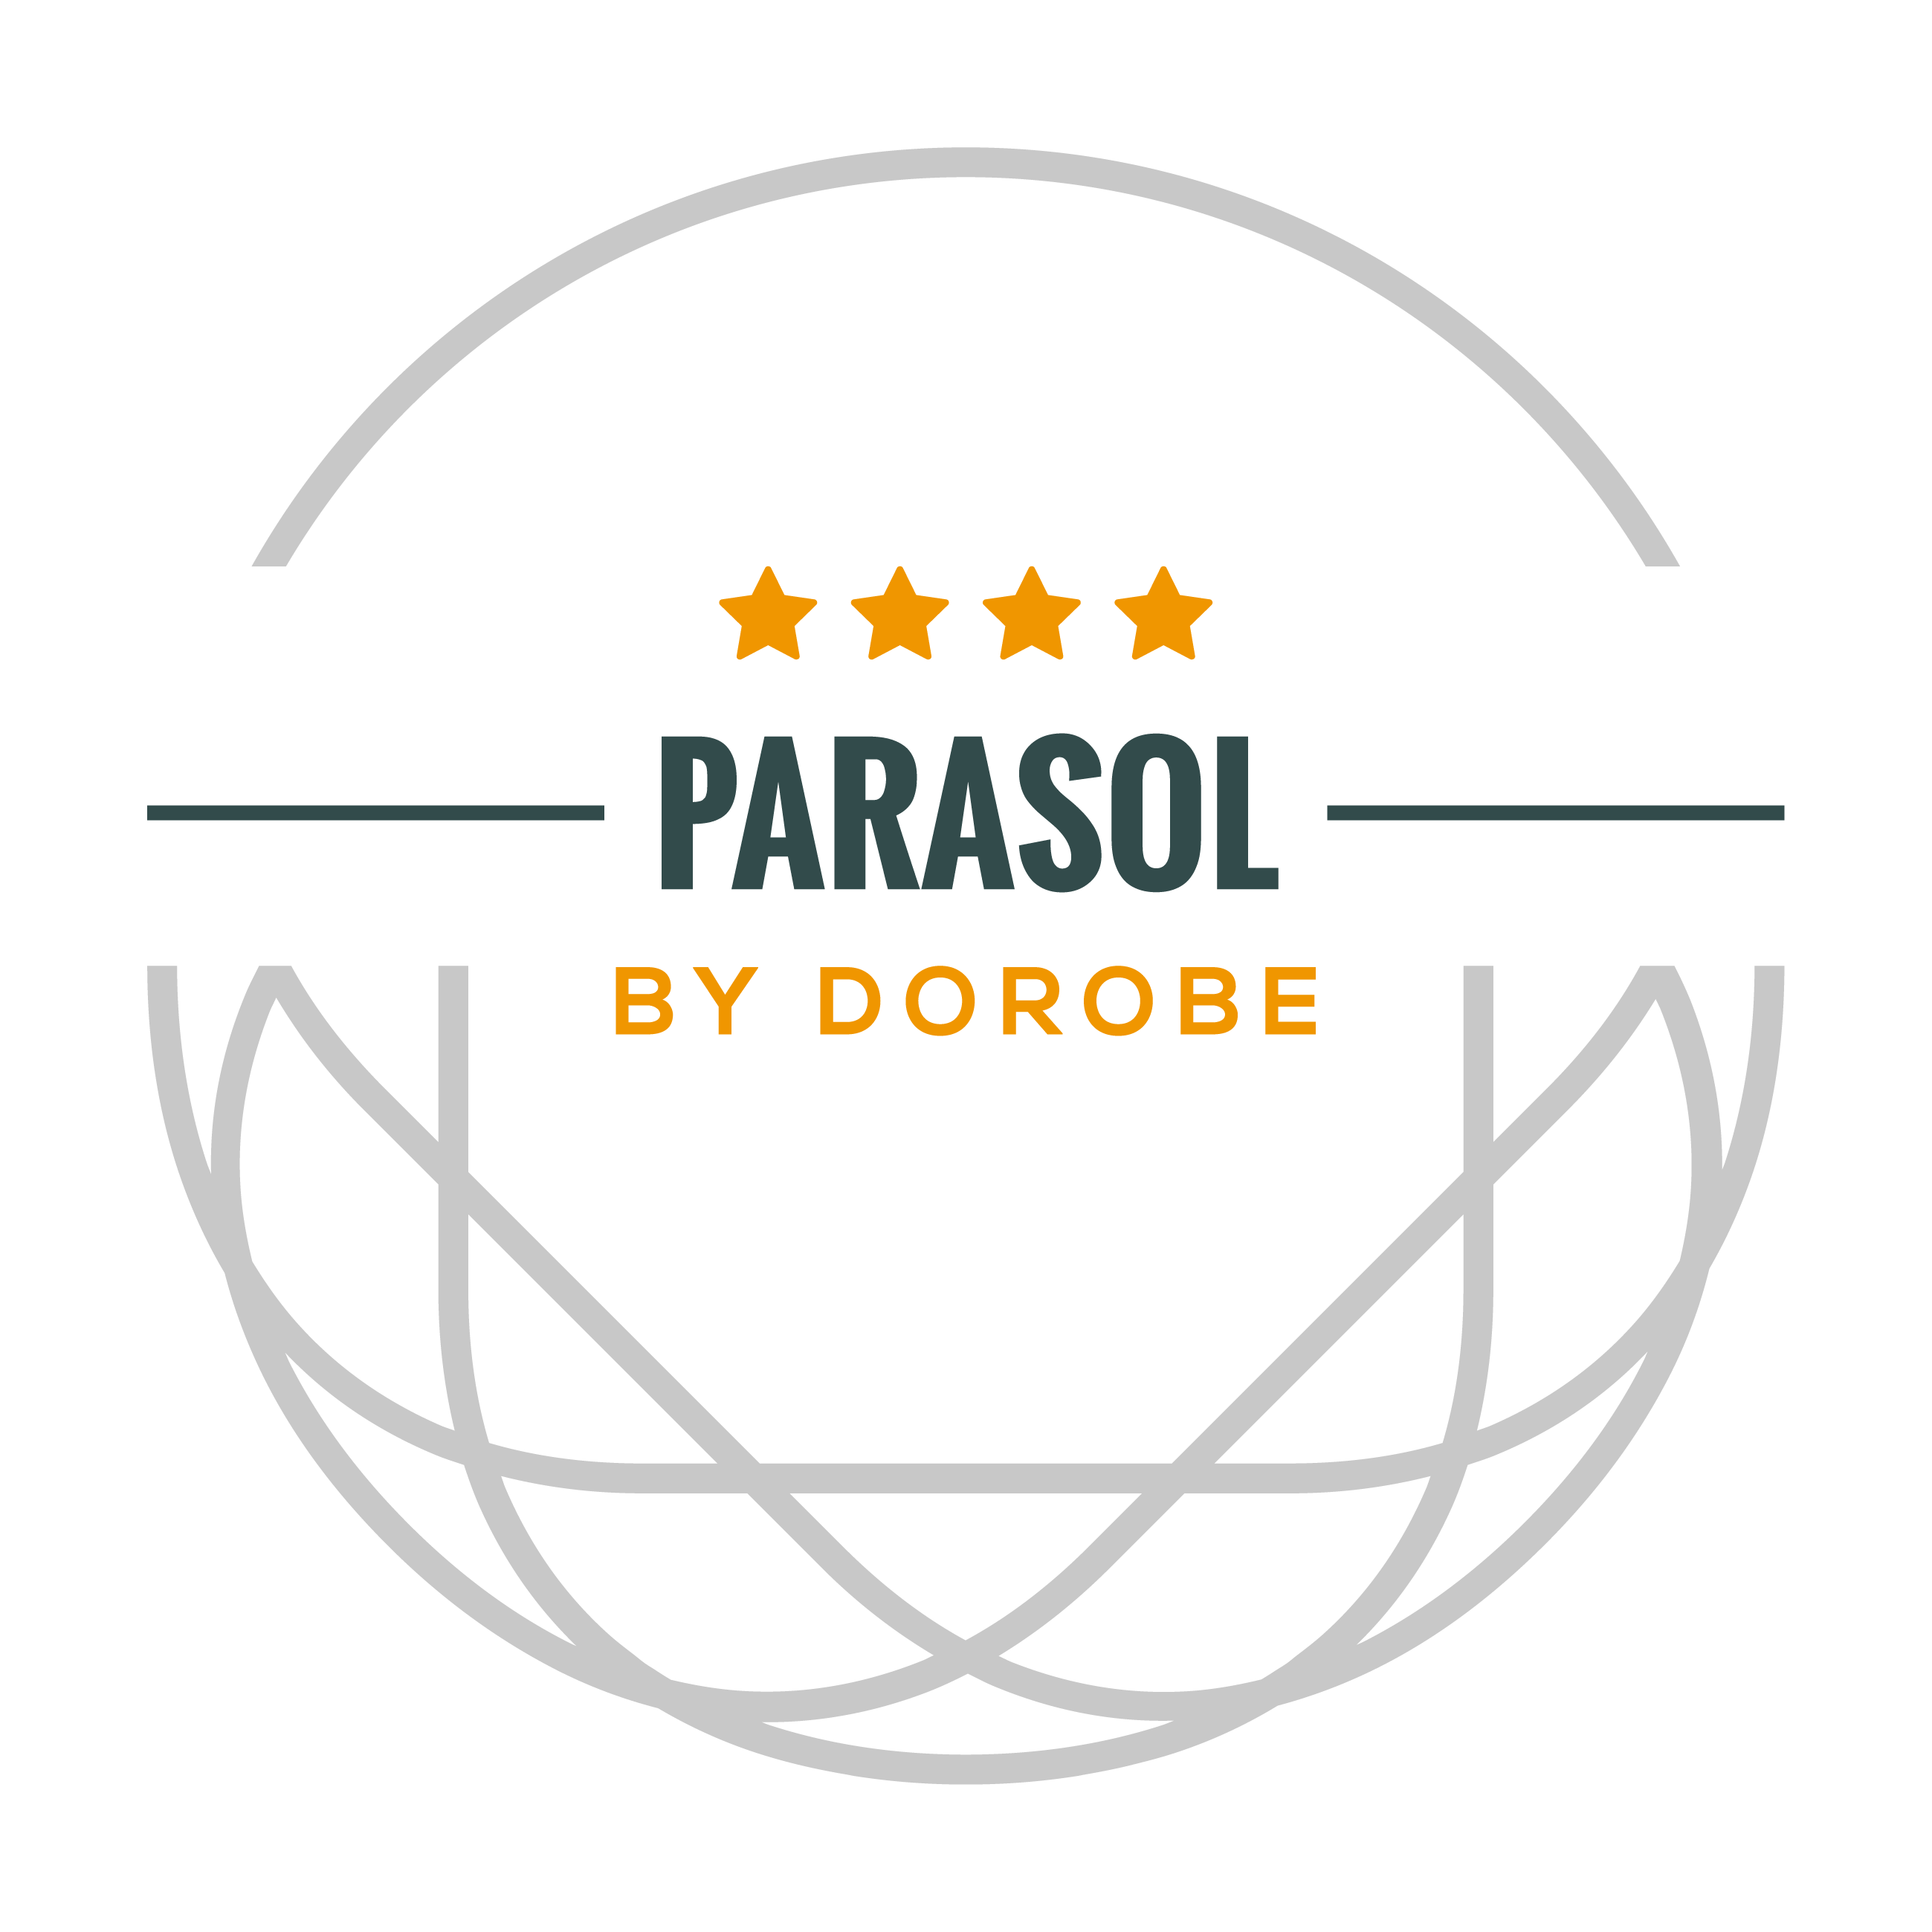 Parasol Garden by Dorobe